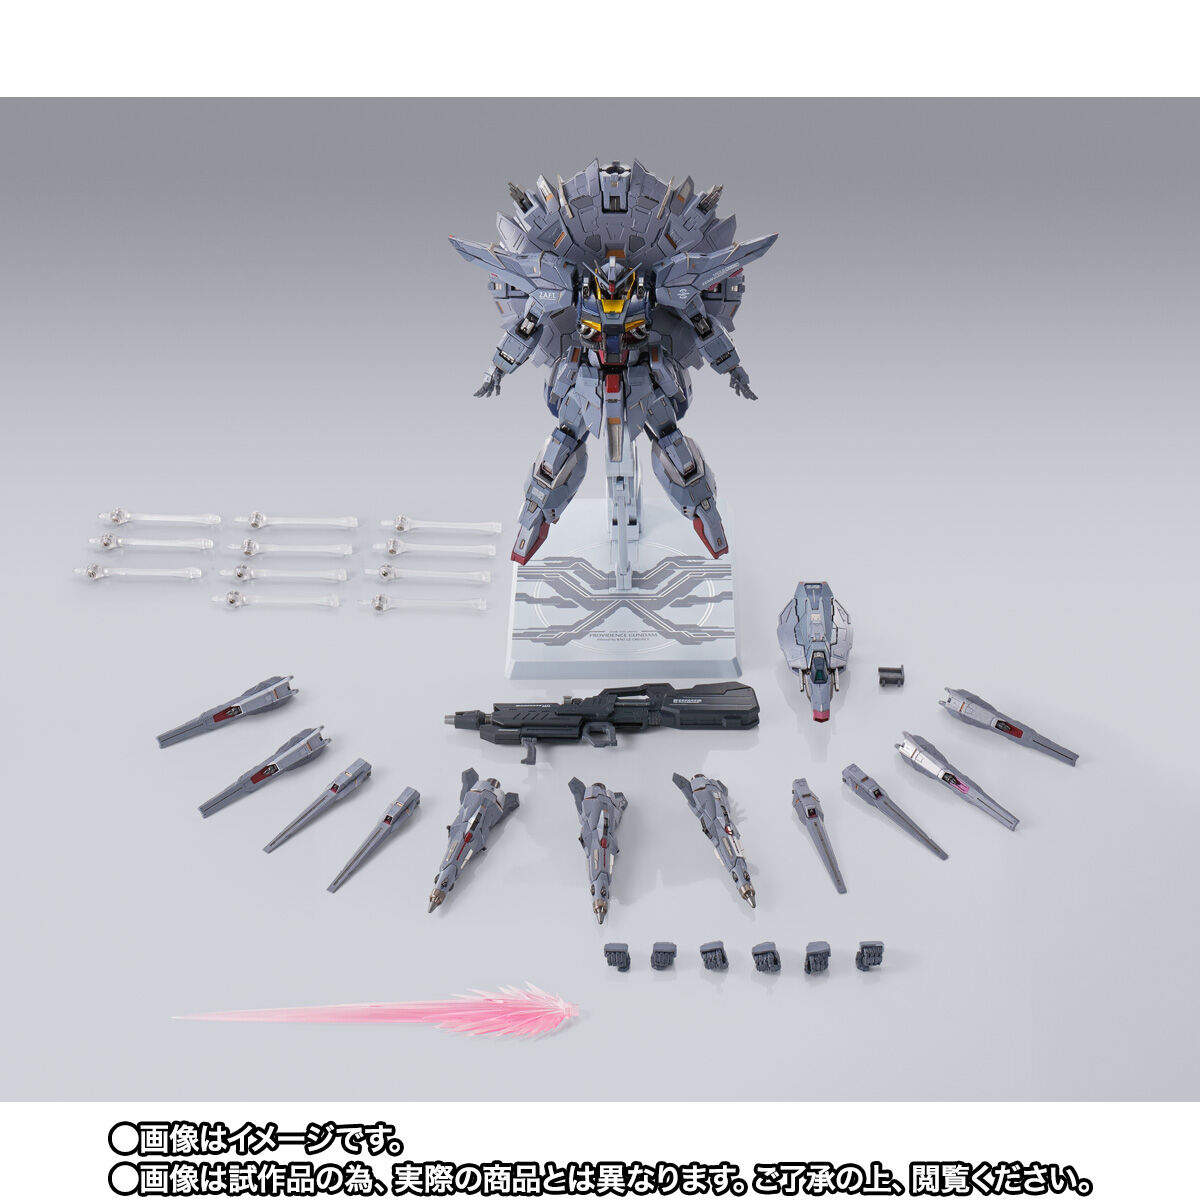 Metal Build ZGMF-X13A Providence Gundam